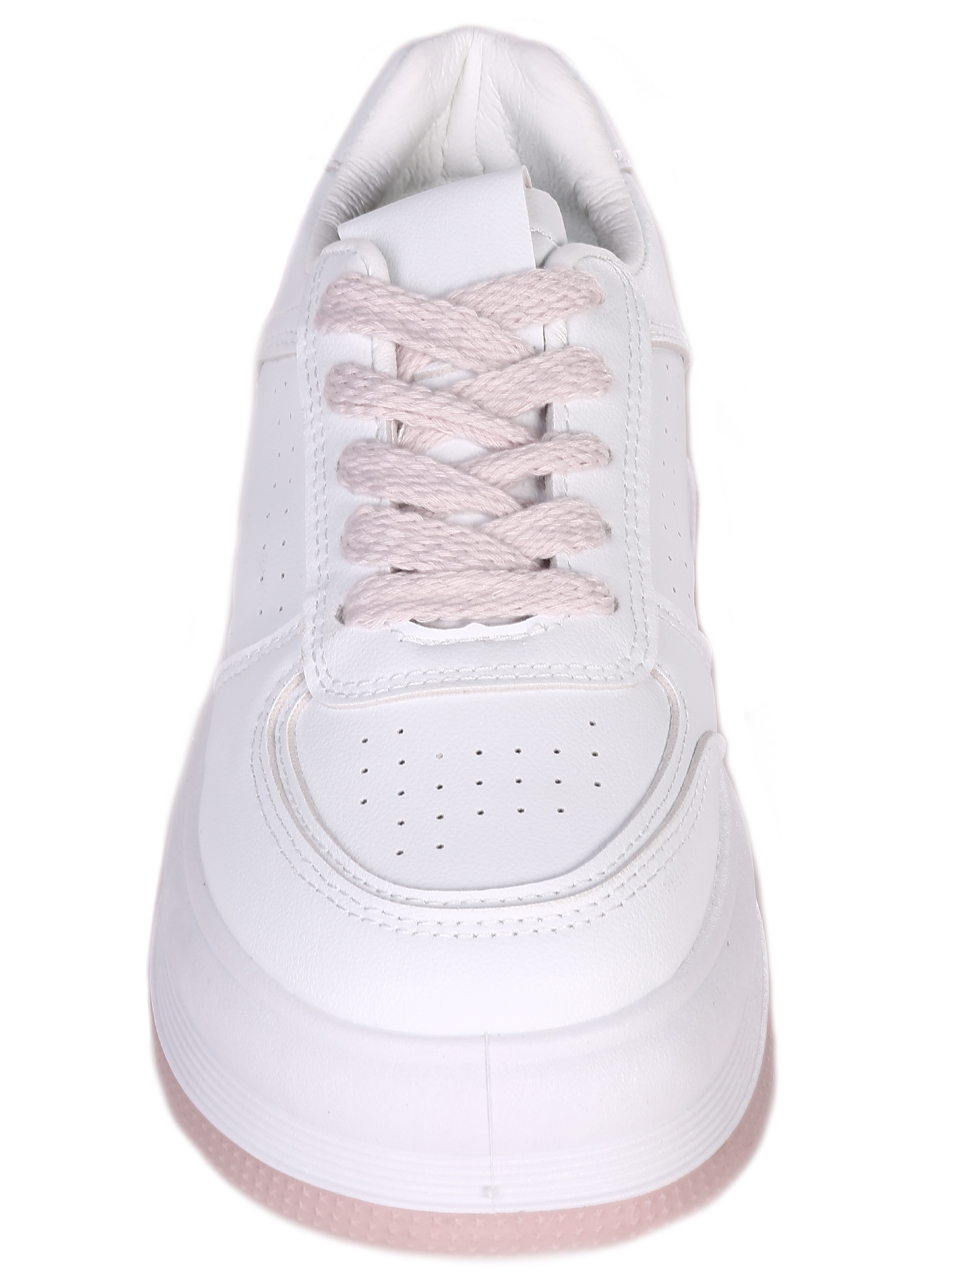  3U-23060 white/pink